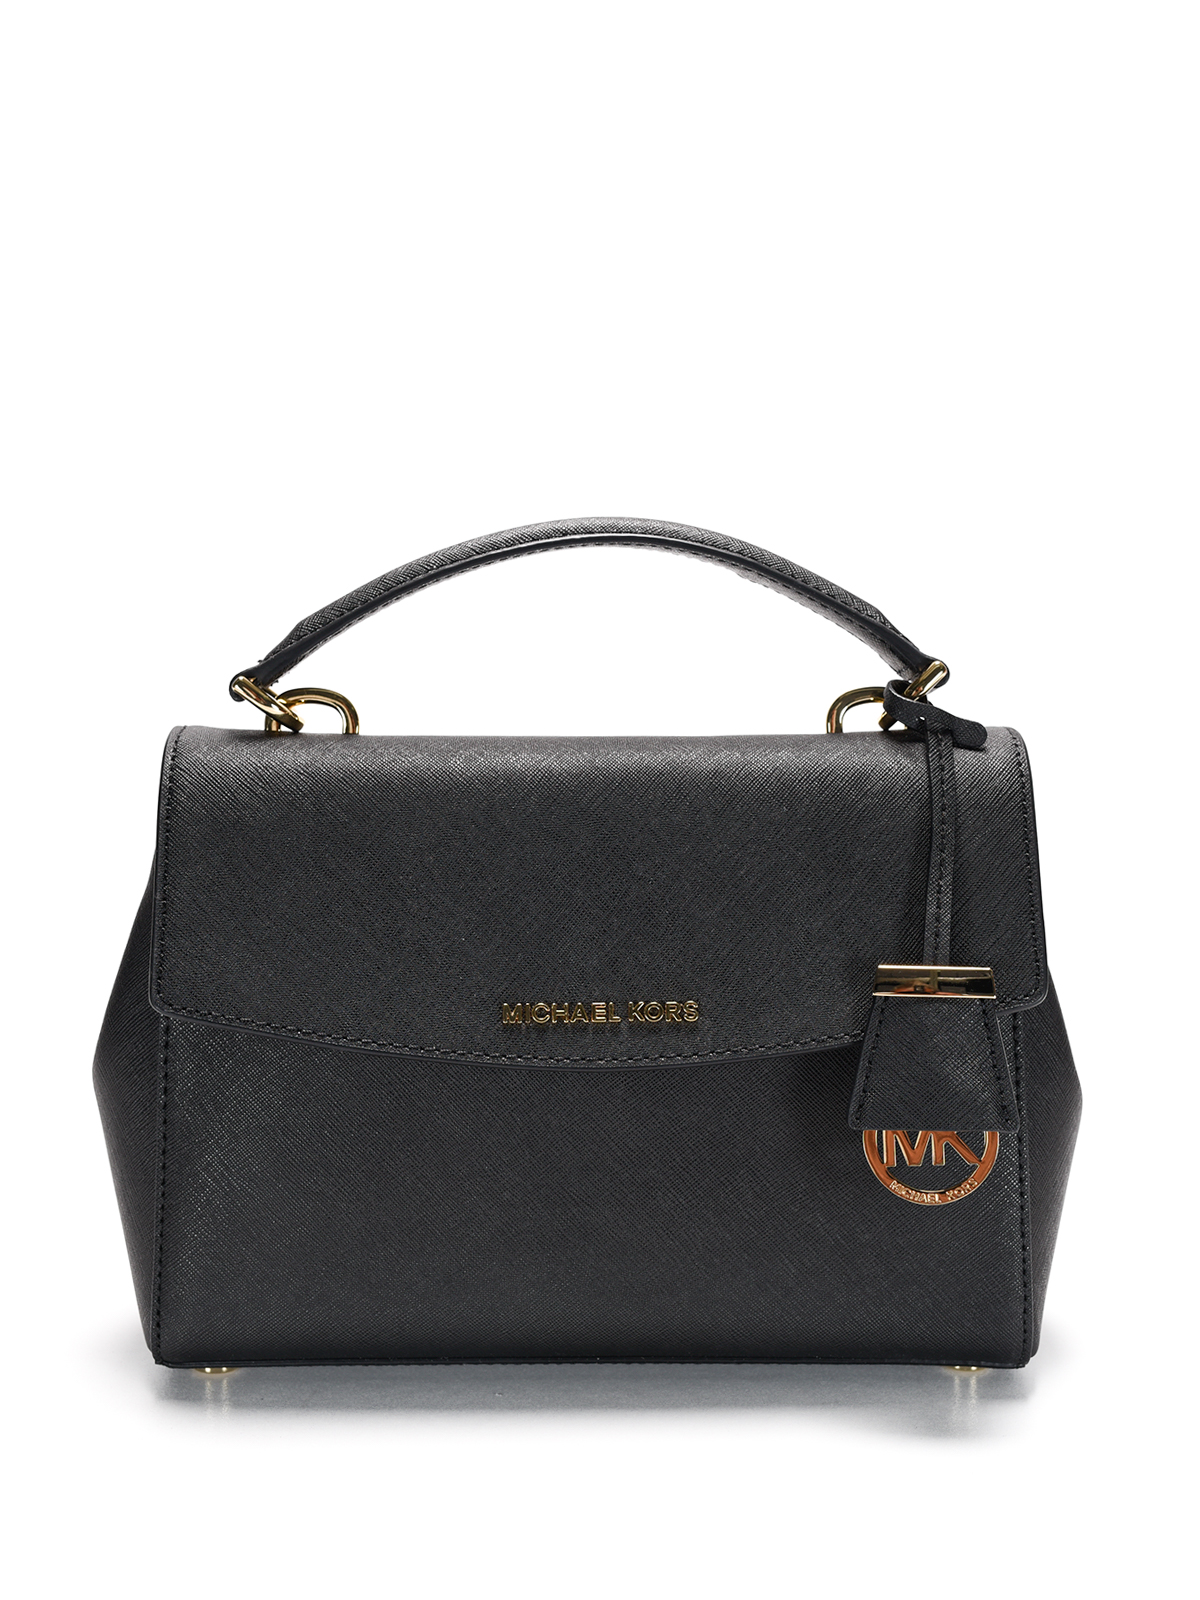 Ava Small Black Leather Saffiano Satchel Bag